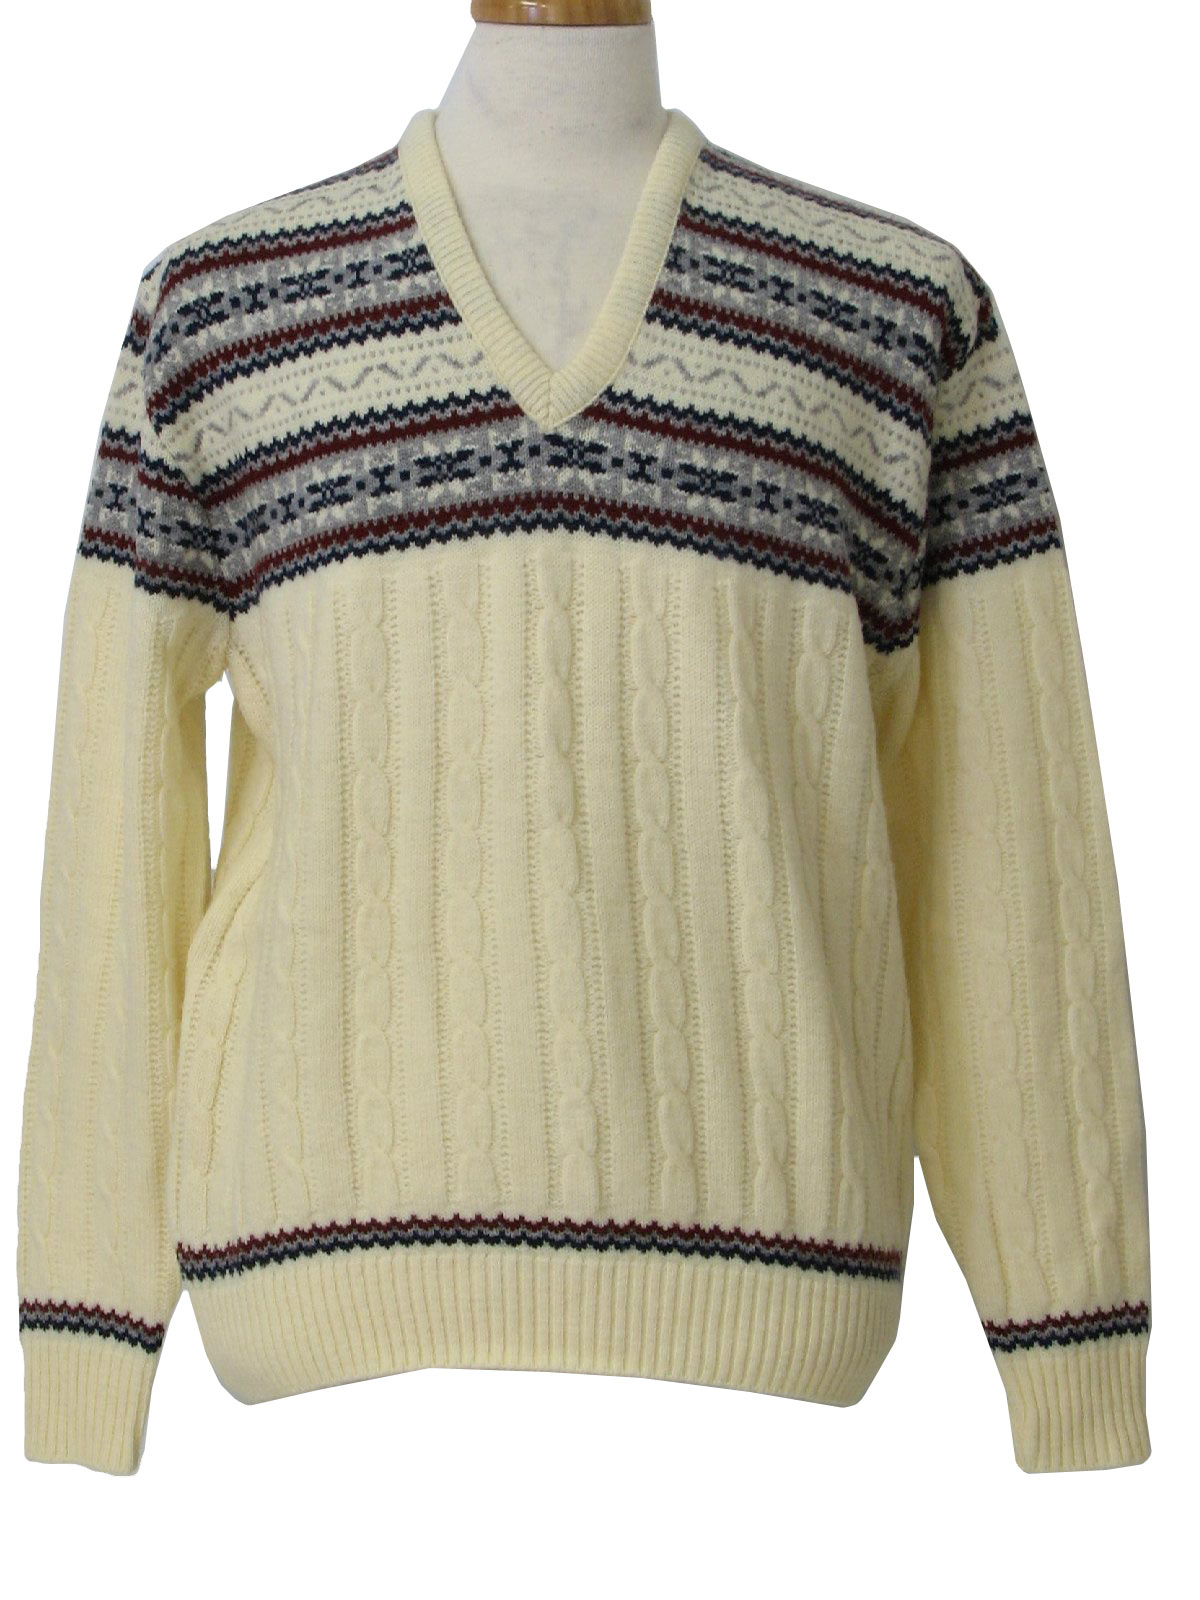 90's Jantzen Sweater: 90s -Jantzen- Mens off white, grey, maroon and ...